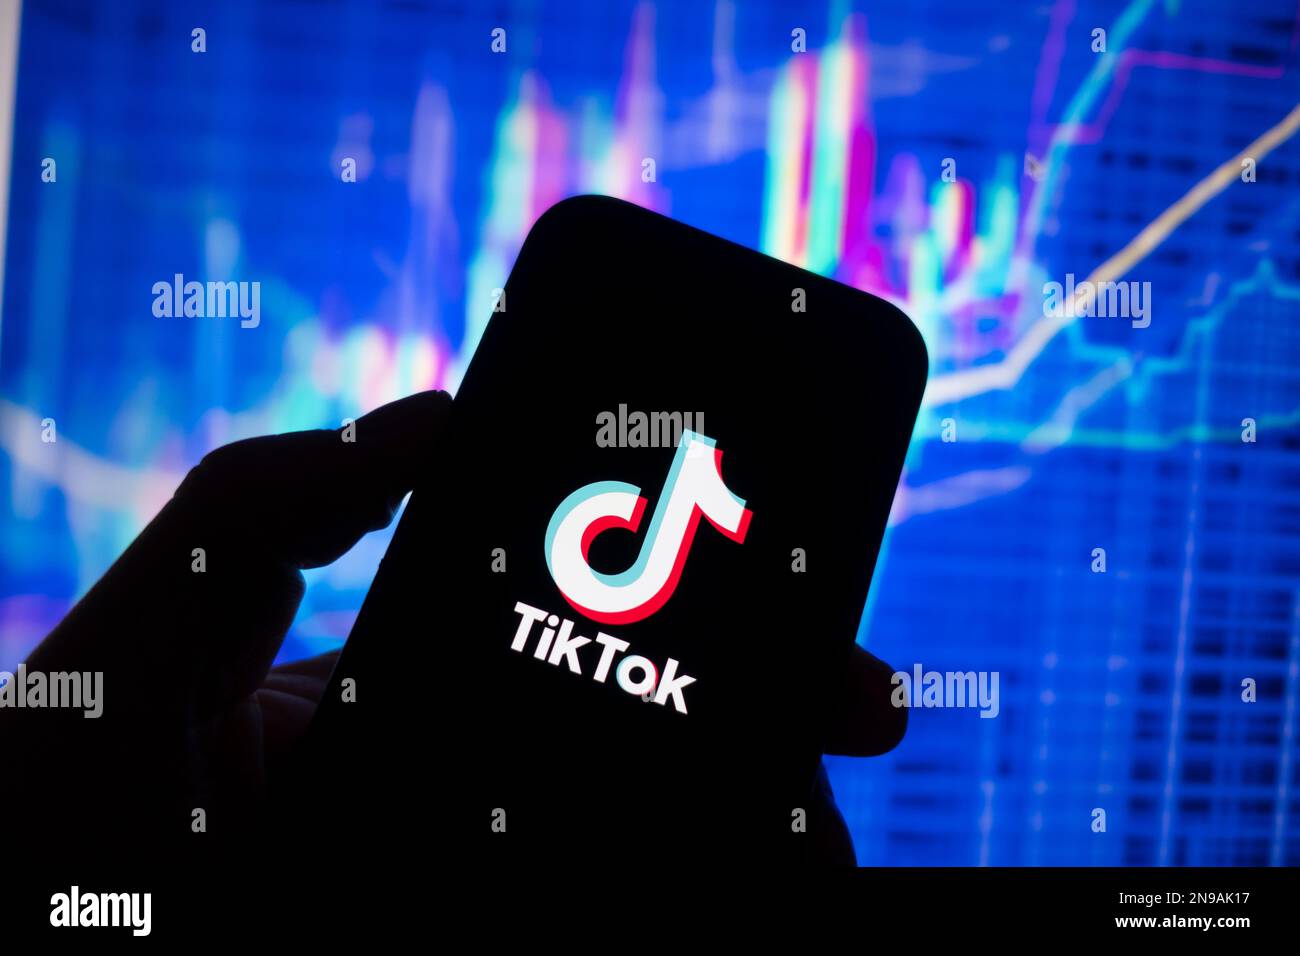 Digital composite image of TikTok social media app logo on phone scree. Stock Photo